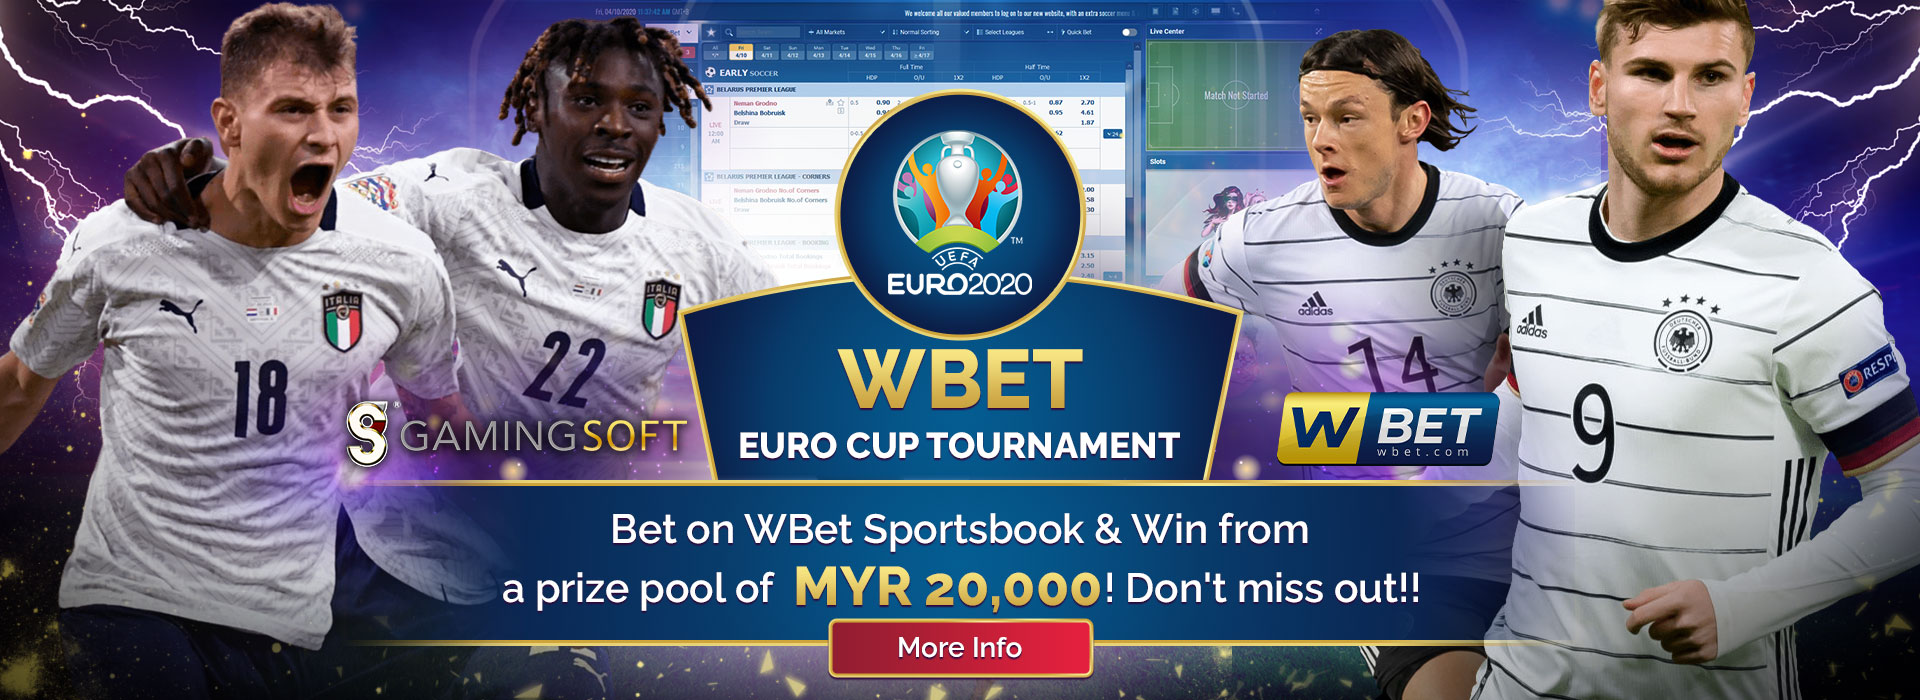 WBet 歐洲杯競投活動